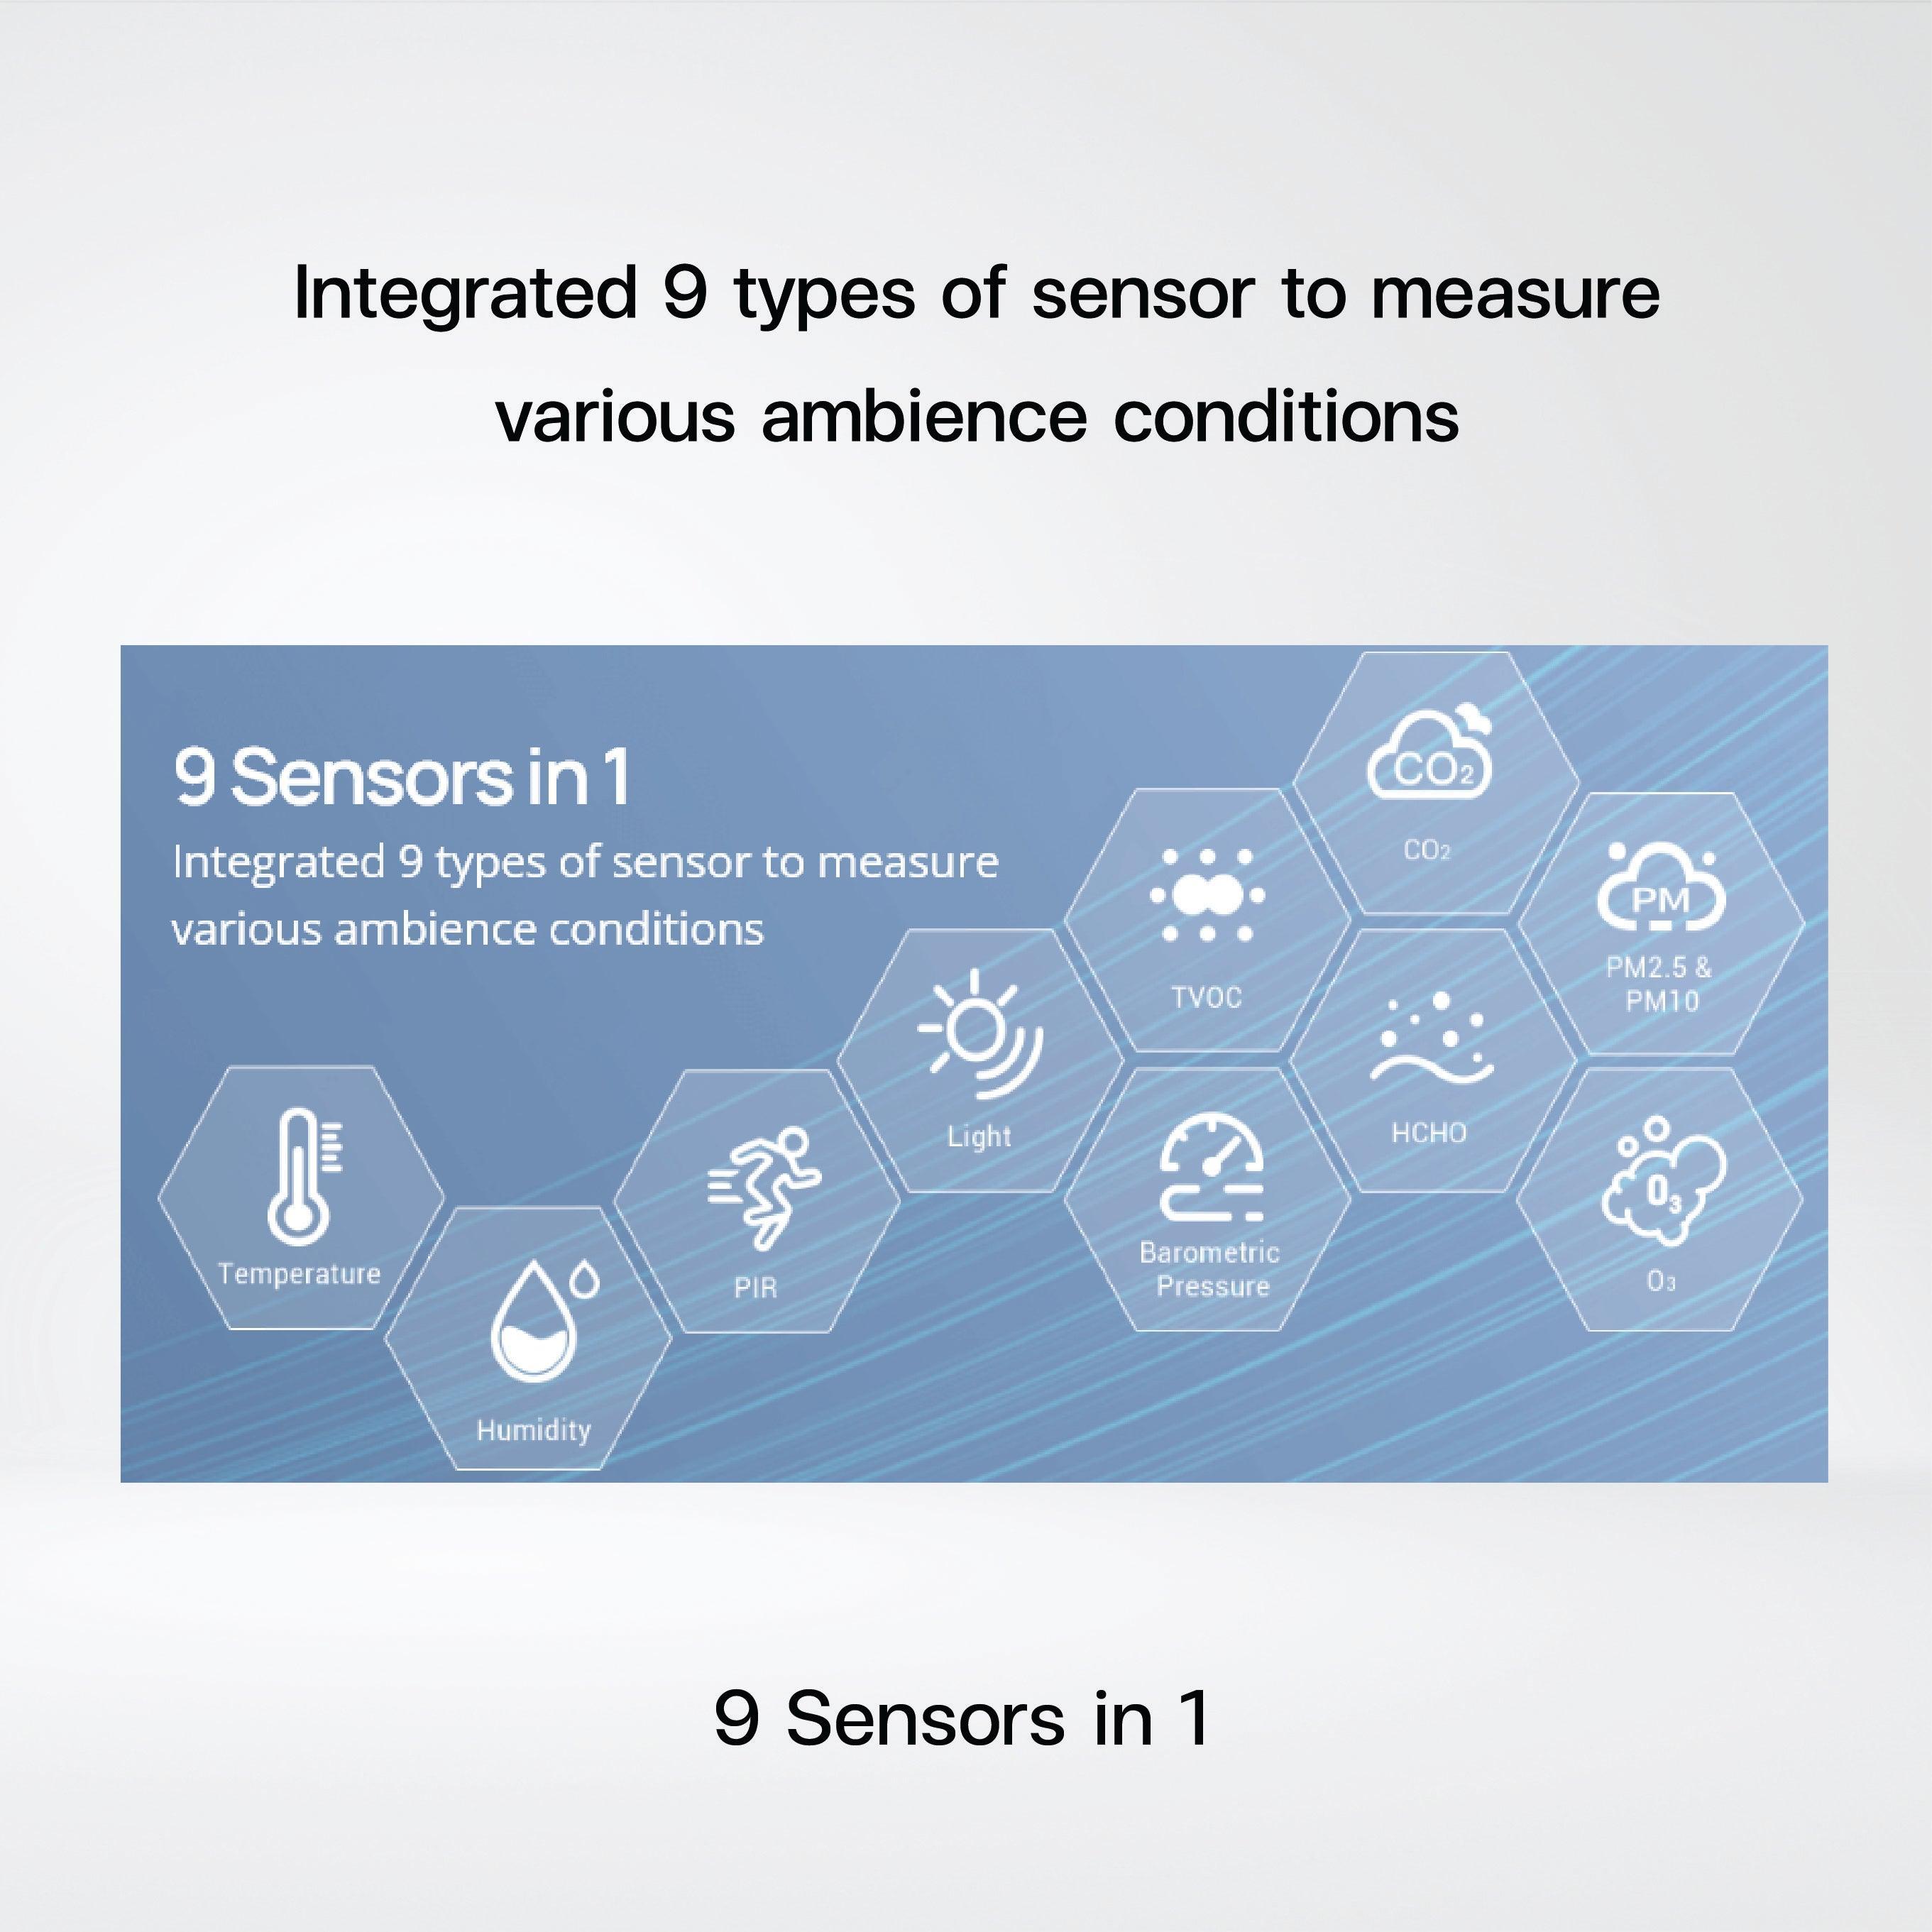 AM319 Ambience Monitoring Sensor - Riverplus